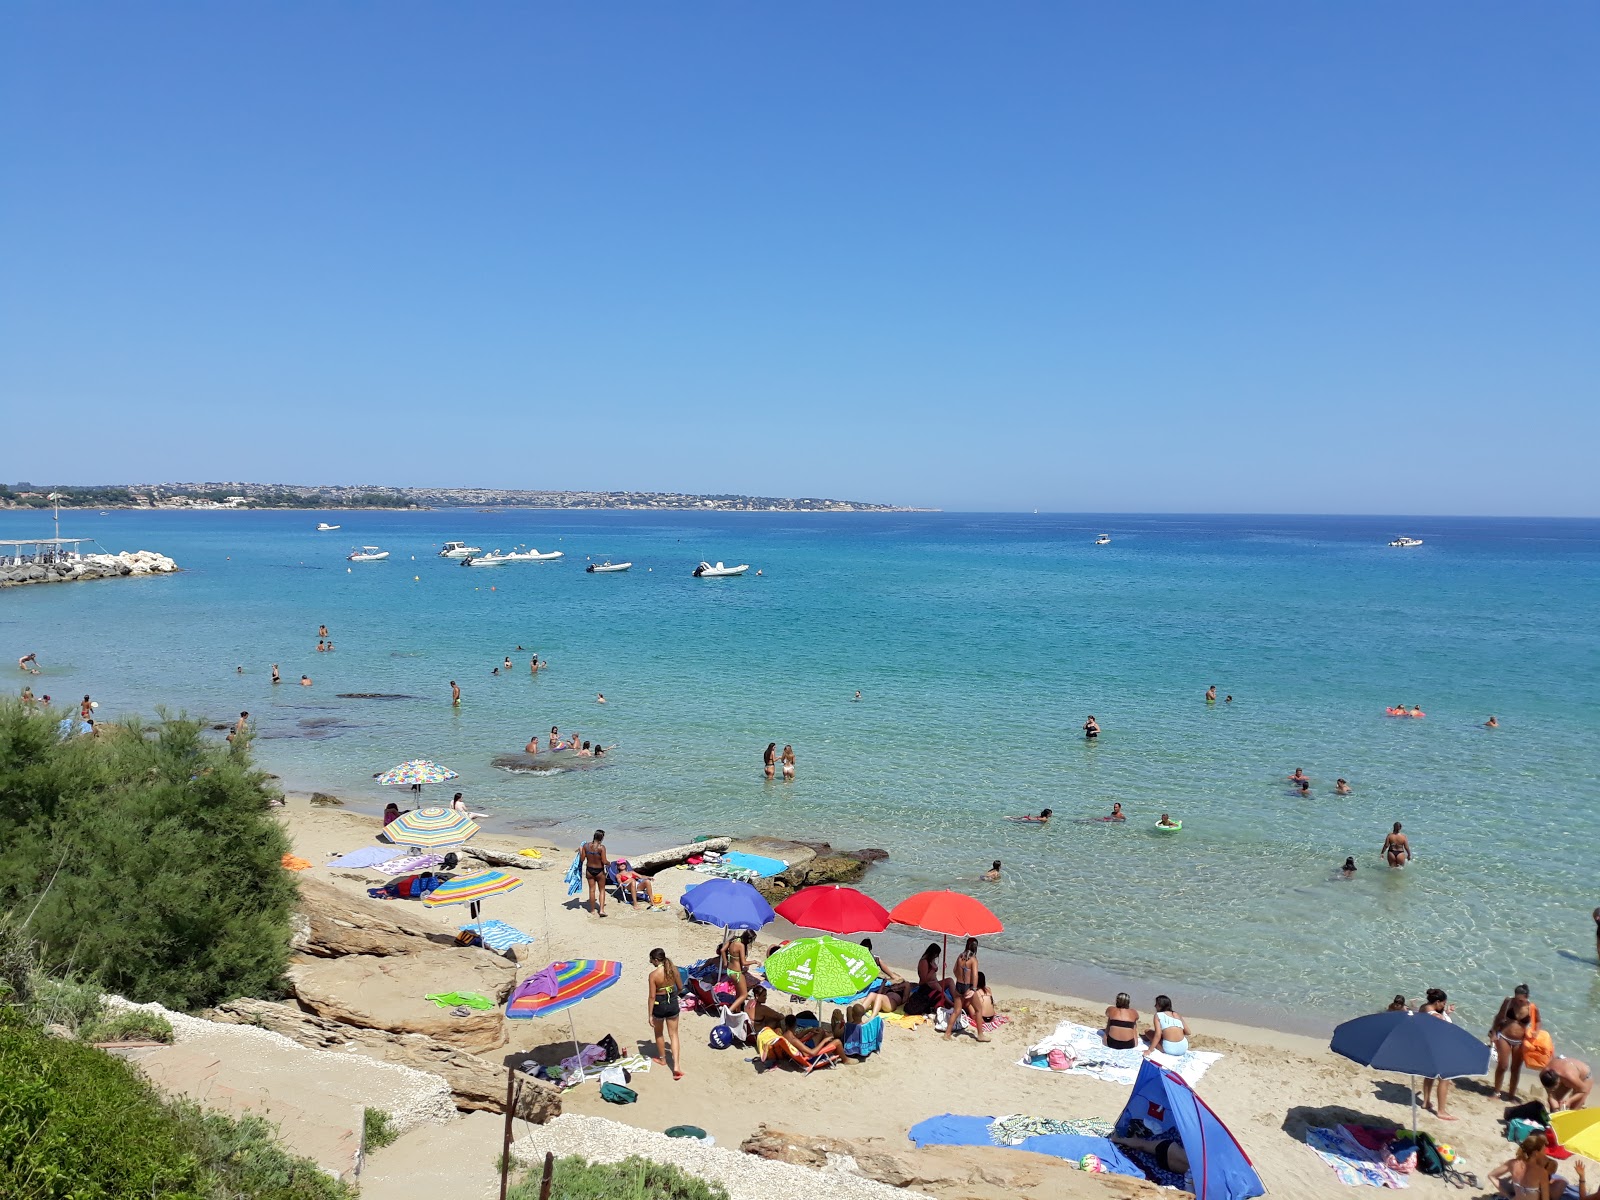 Spiaggia dell'Arenella II'in fotoğrafı parlak kum yüzey ile